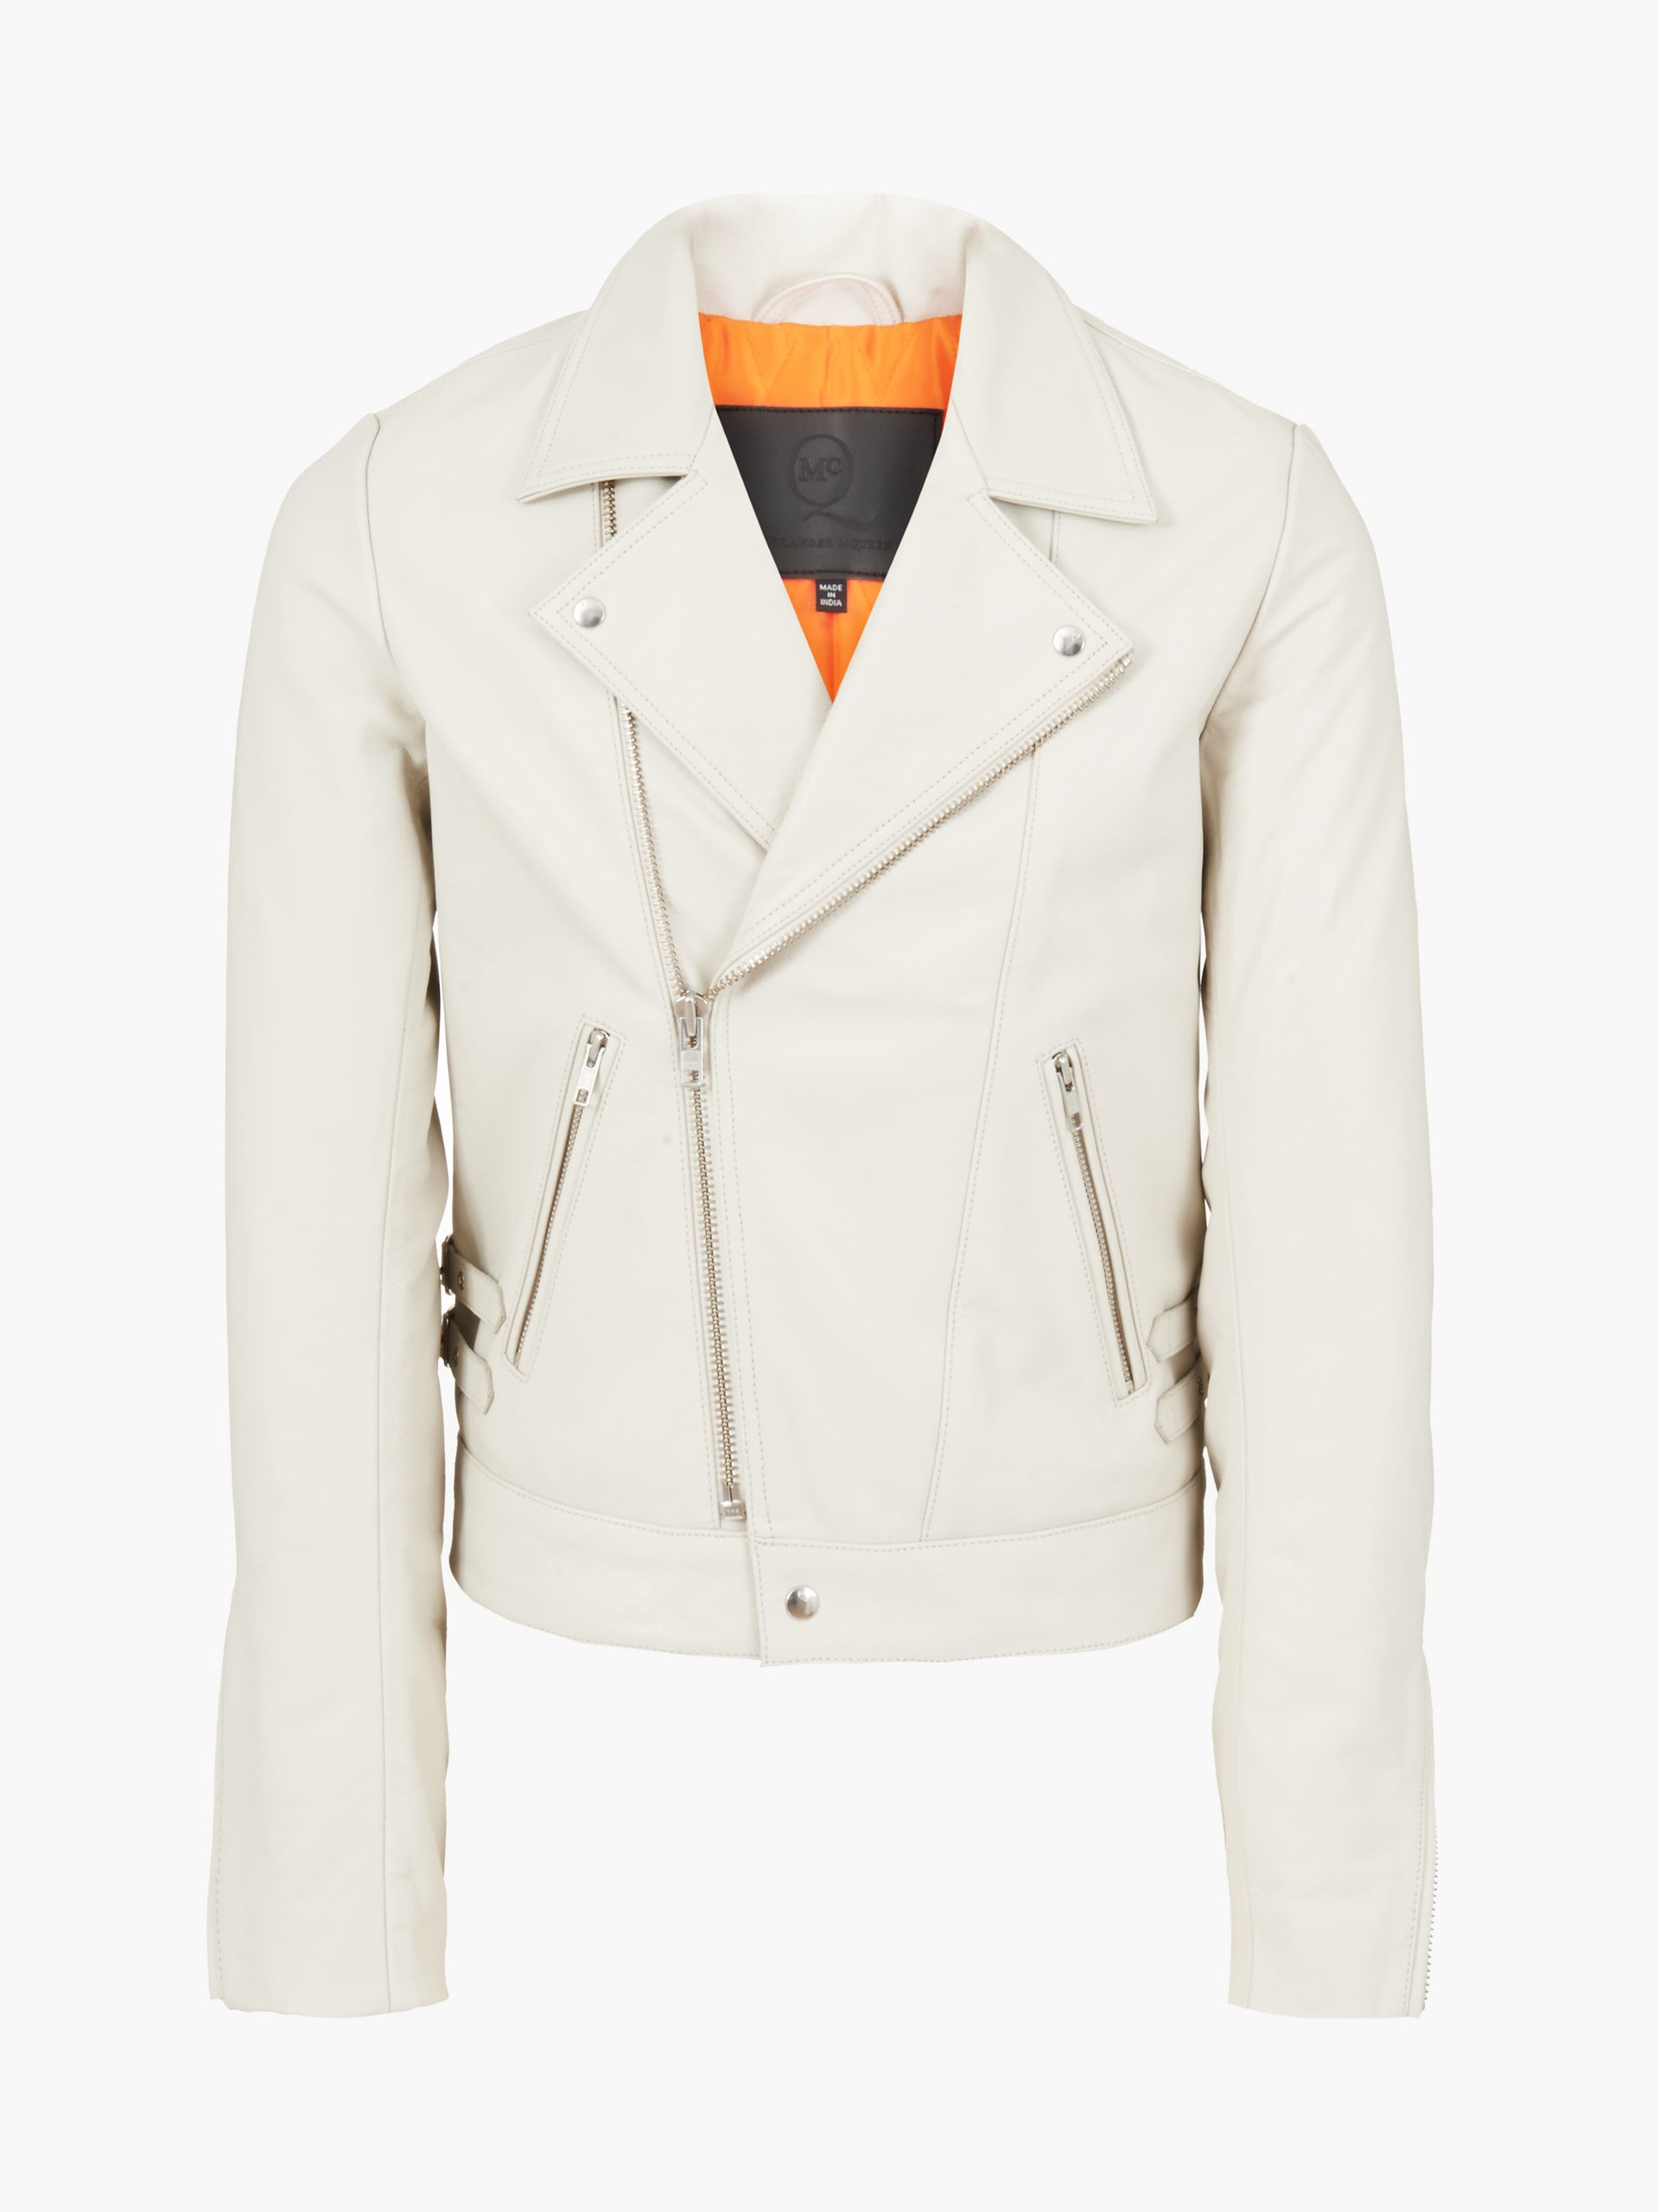 Lyst - Mcq Leather Biker Jacket in White for Men